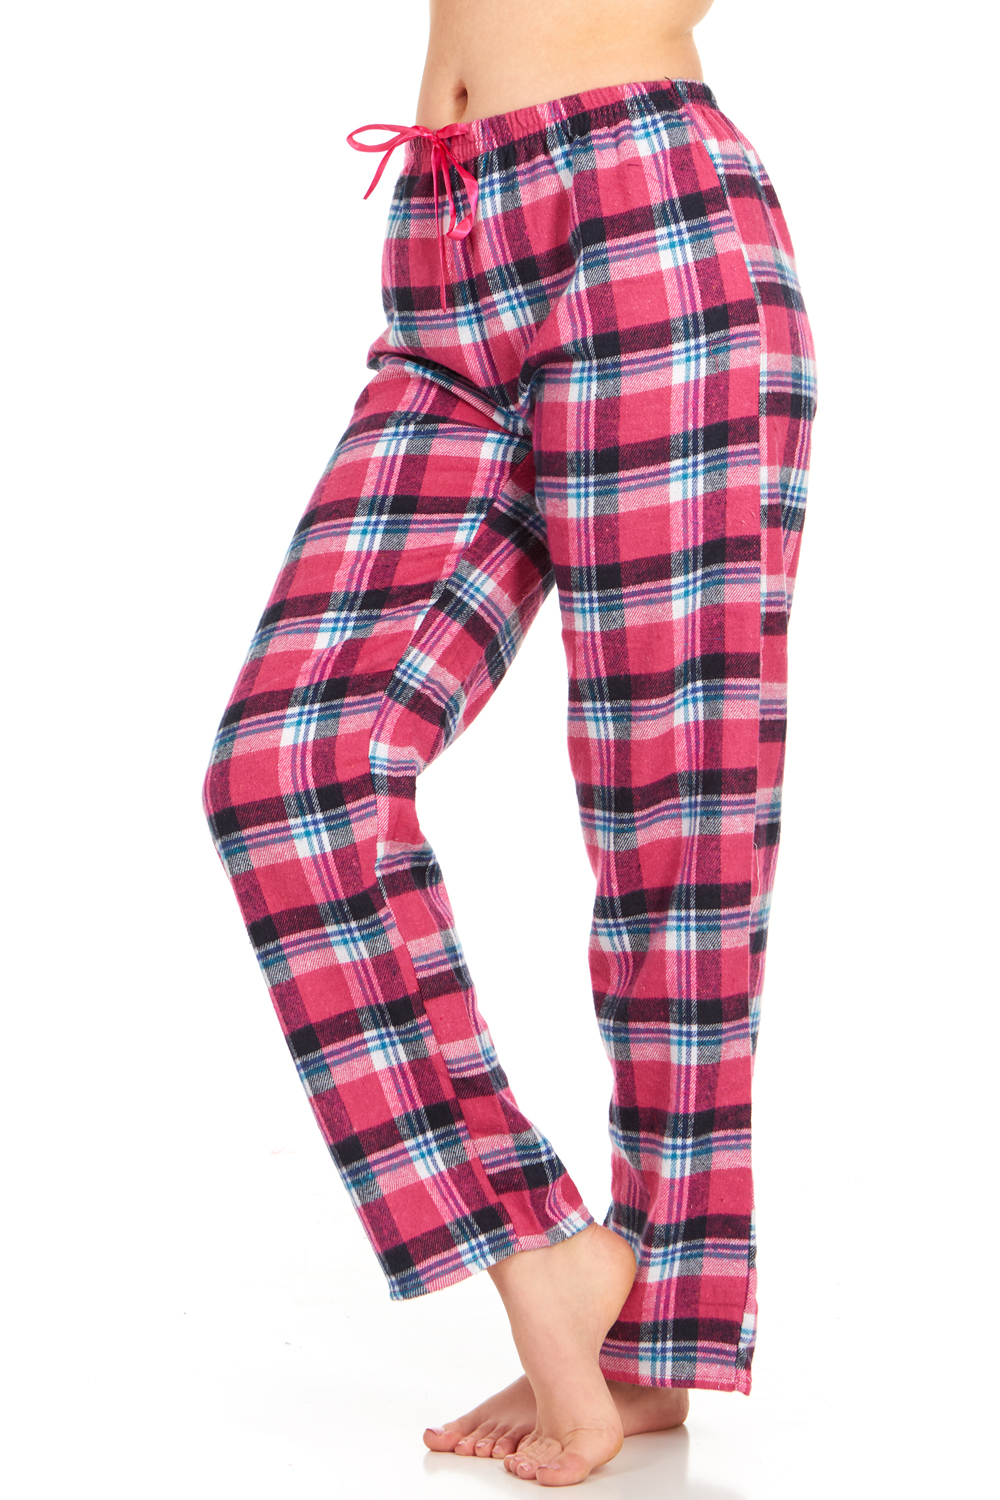 Zando Pajama Pants for Women Plaid Pajama Pants Pajama Bottoms Women Cotton Pajama Pants Sleepwear